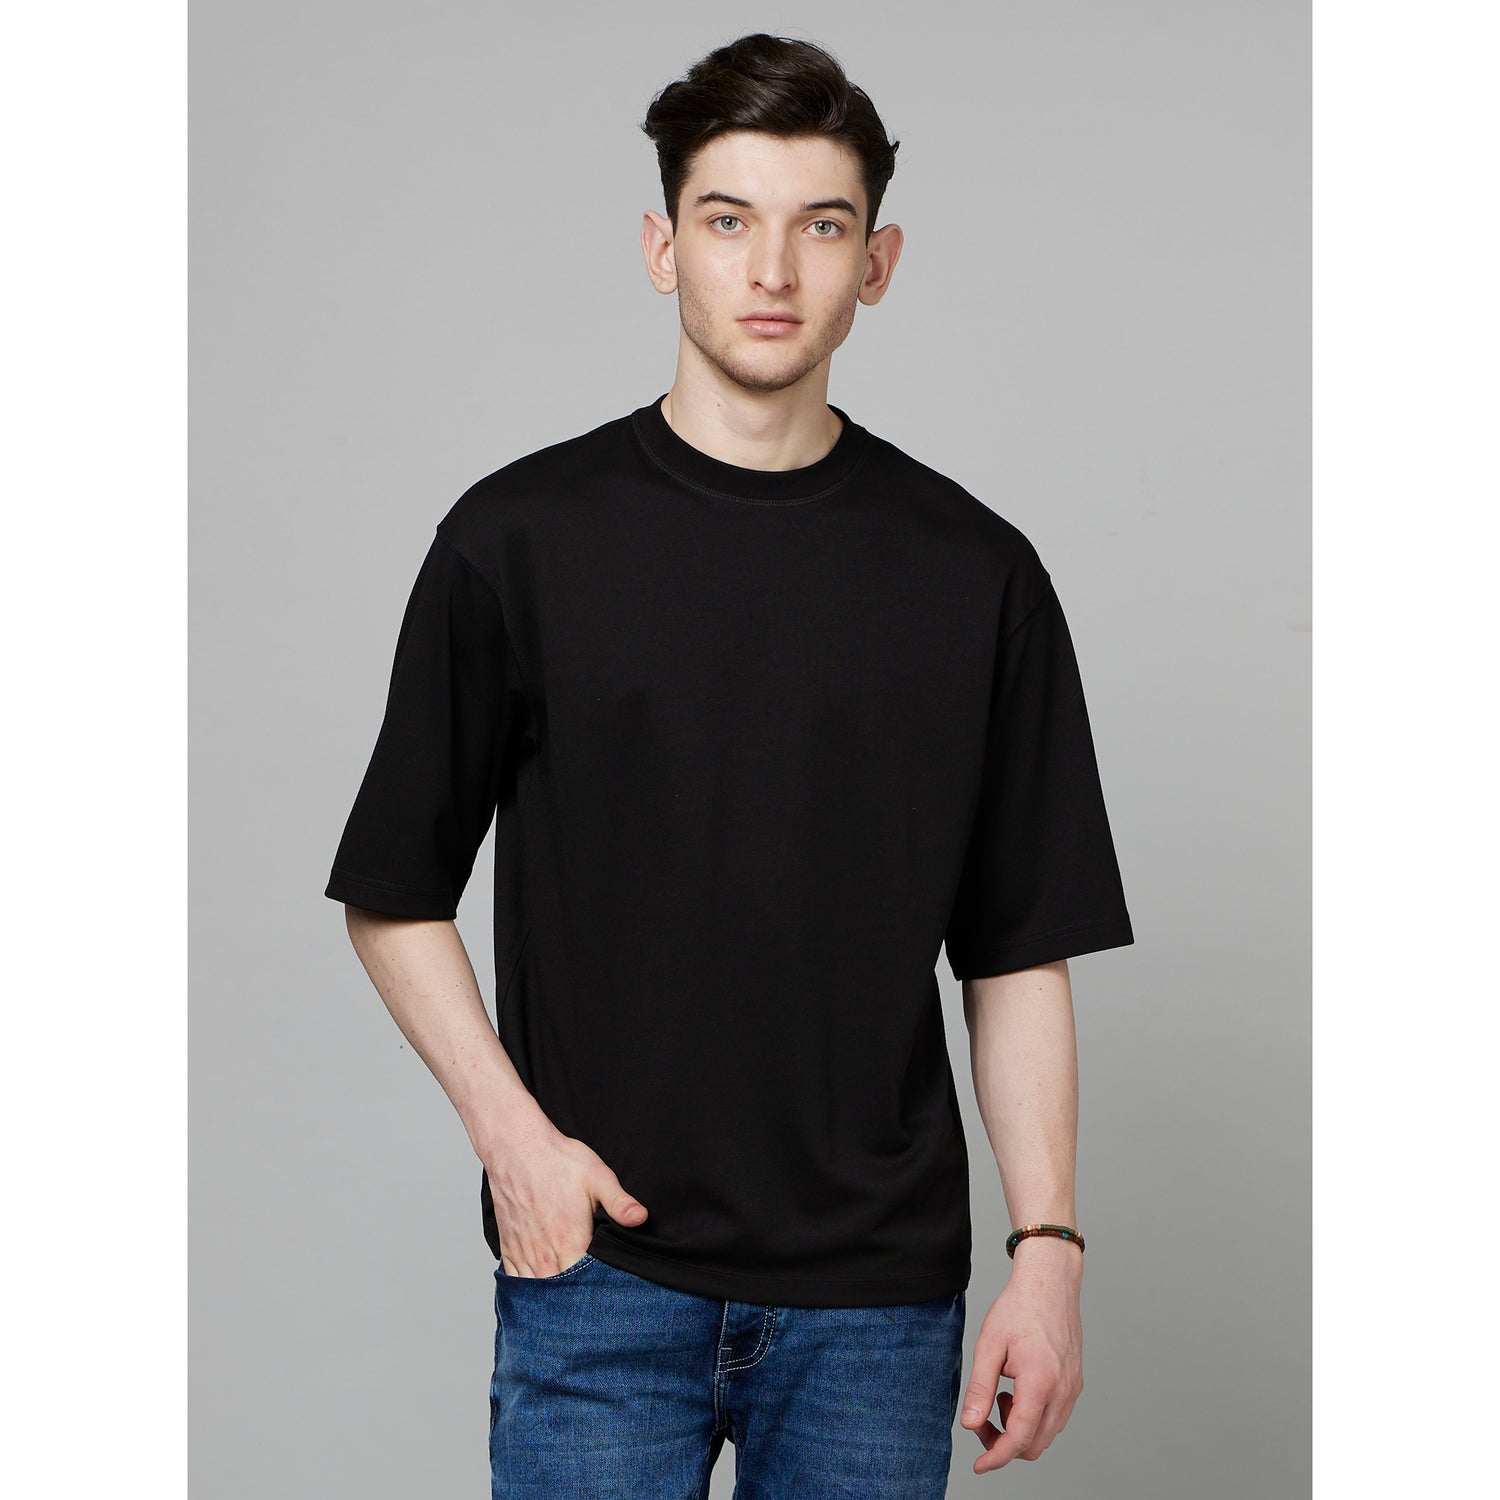 Black Round Neck Short Sleeves Cotton Casual T-Shirt (FEHEM)